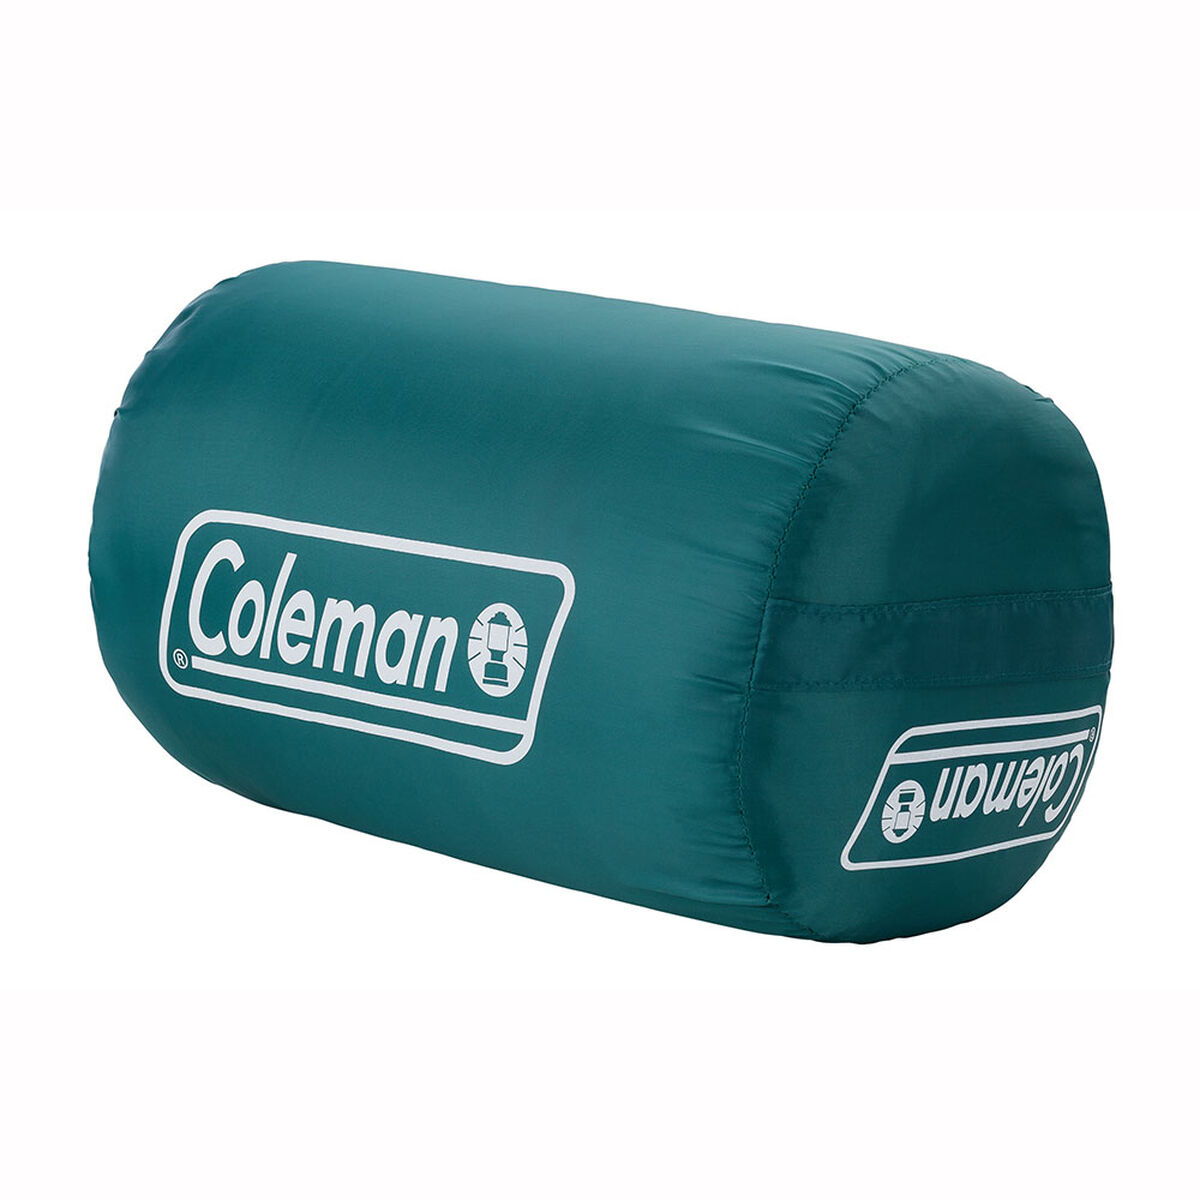 Saco de dormir Coleman Trail Blazer